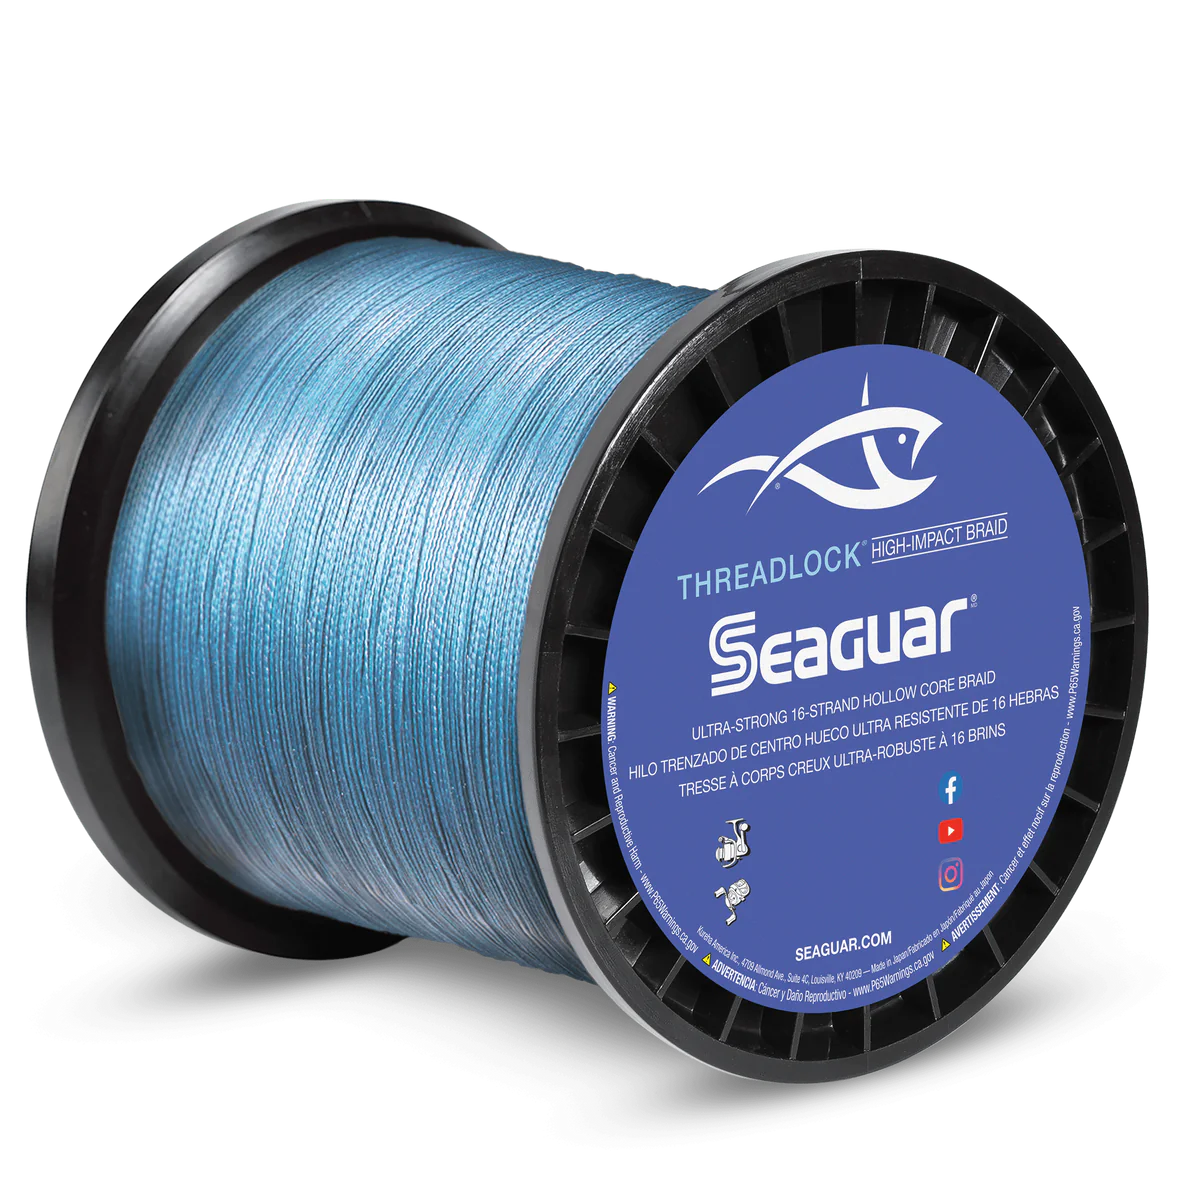 Seaguar Threadlock Braided Fishing Line Blue 600 Yards